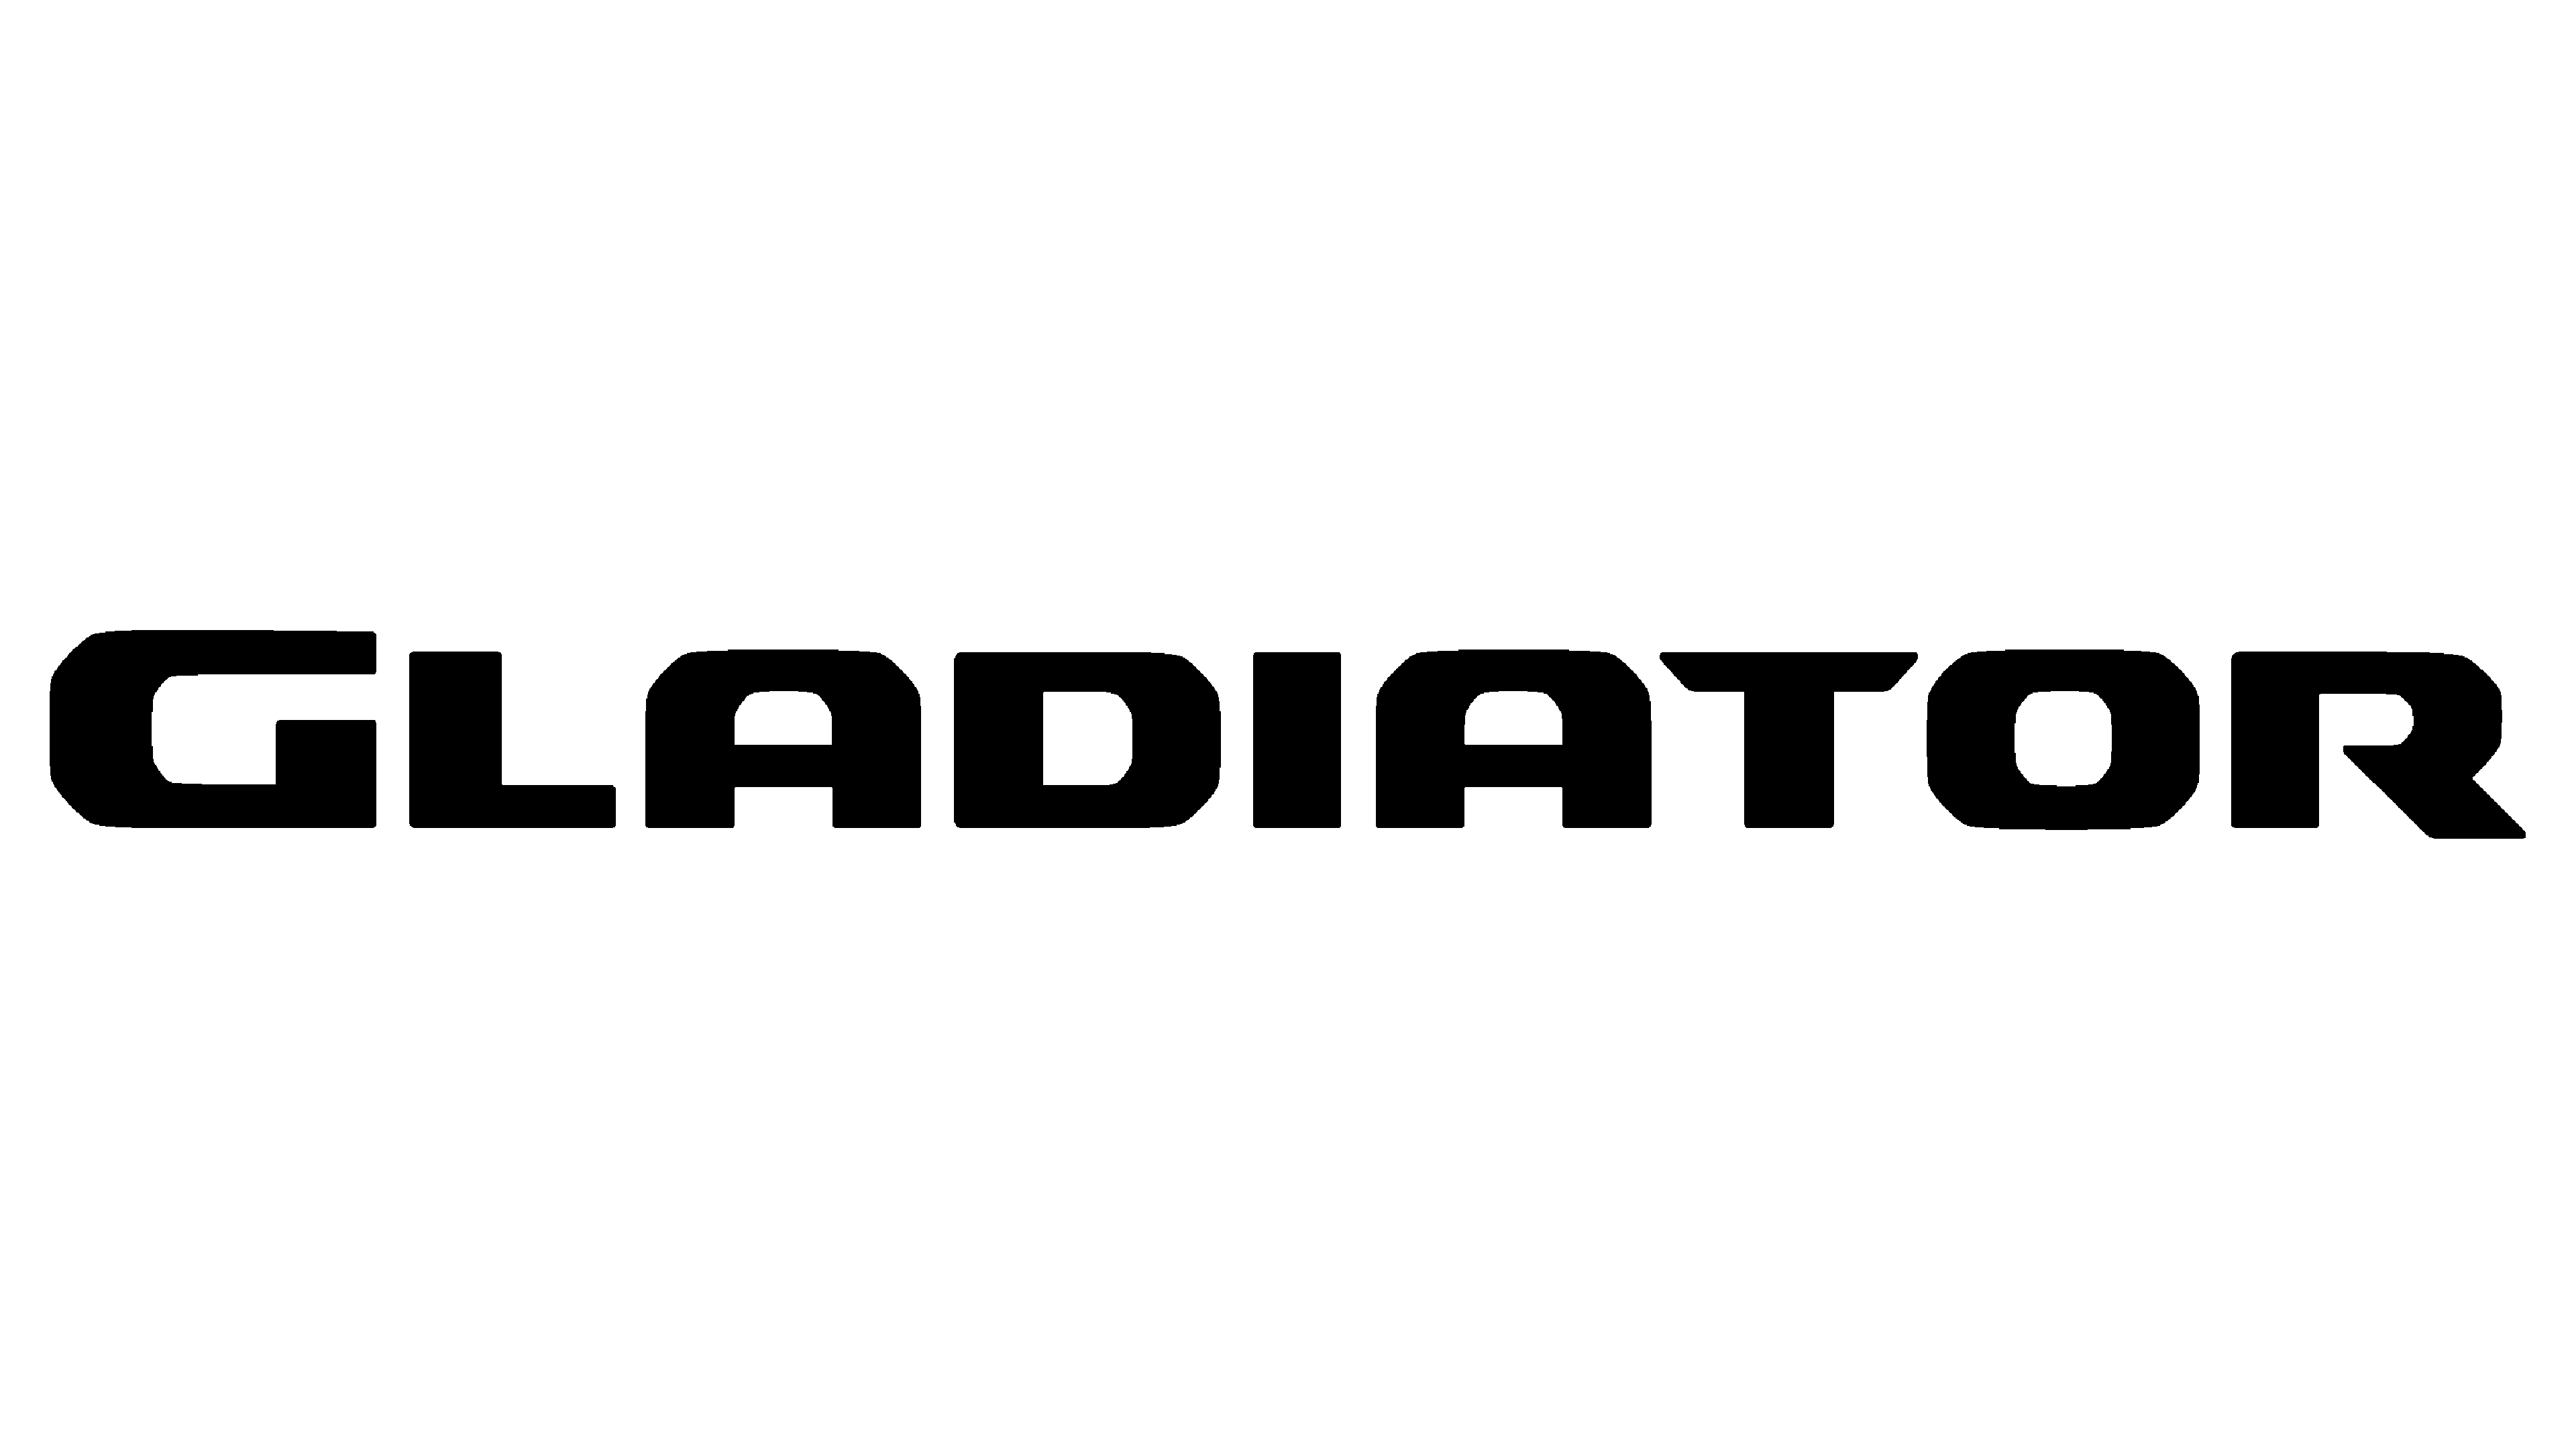 Gladiator Logo Maker | Create Gladiator logos in minutes